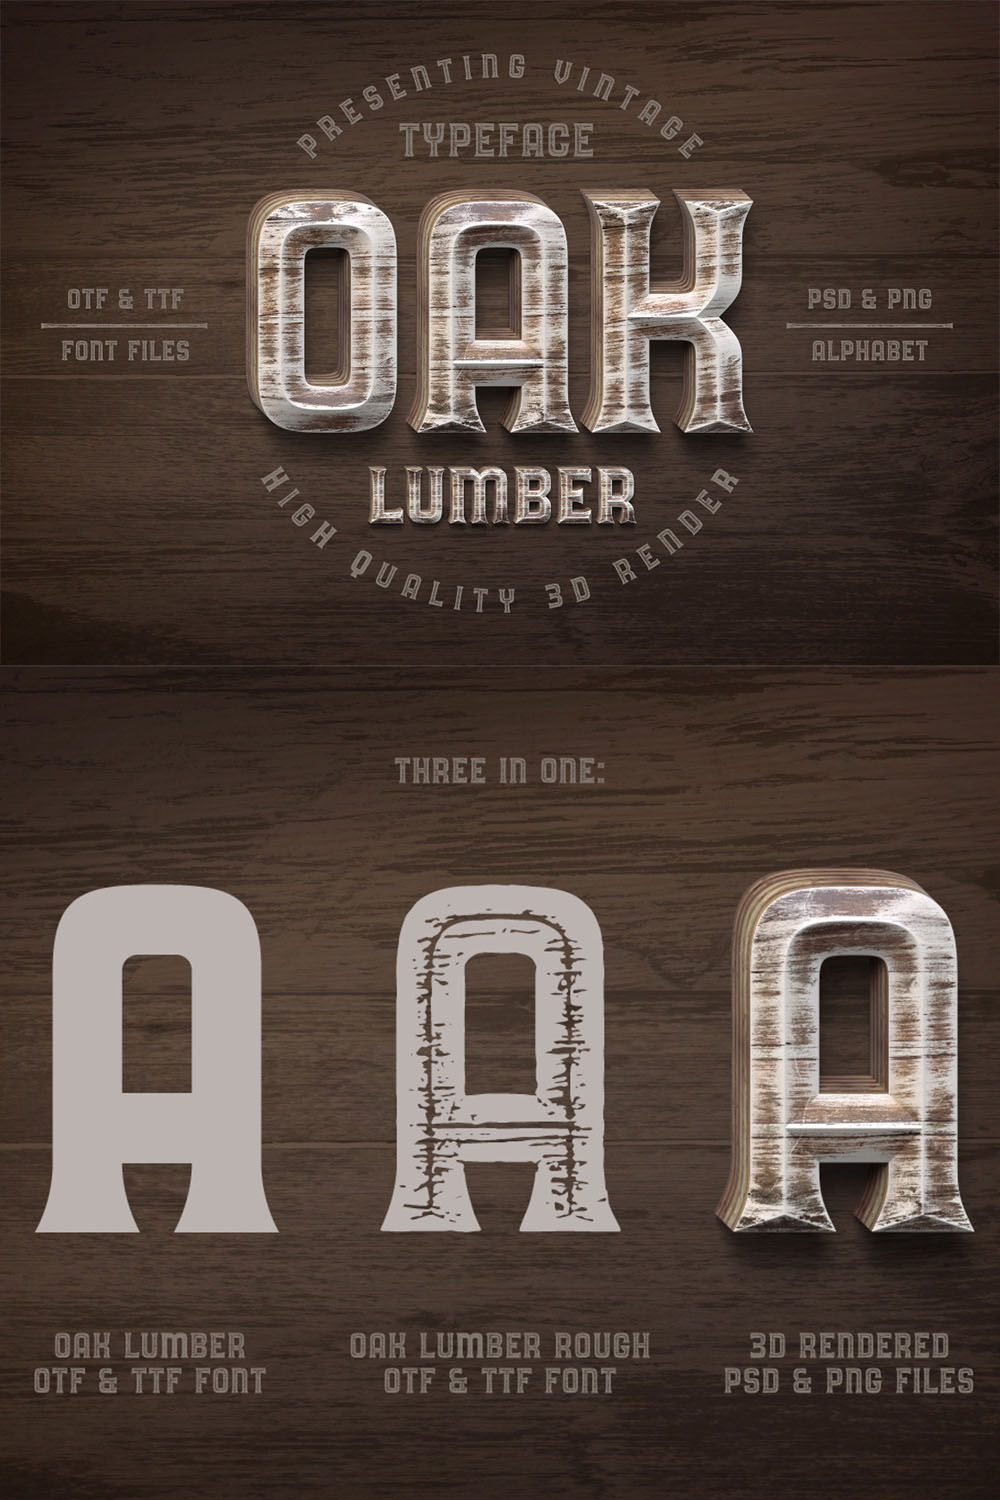 Oak Lumber Font Pinterest Collage image.